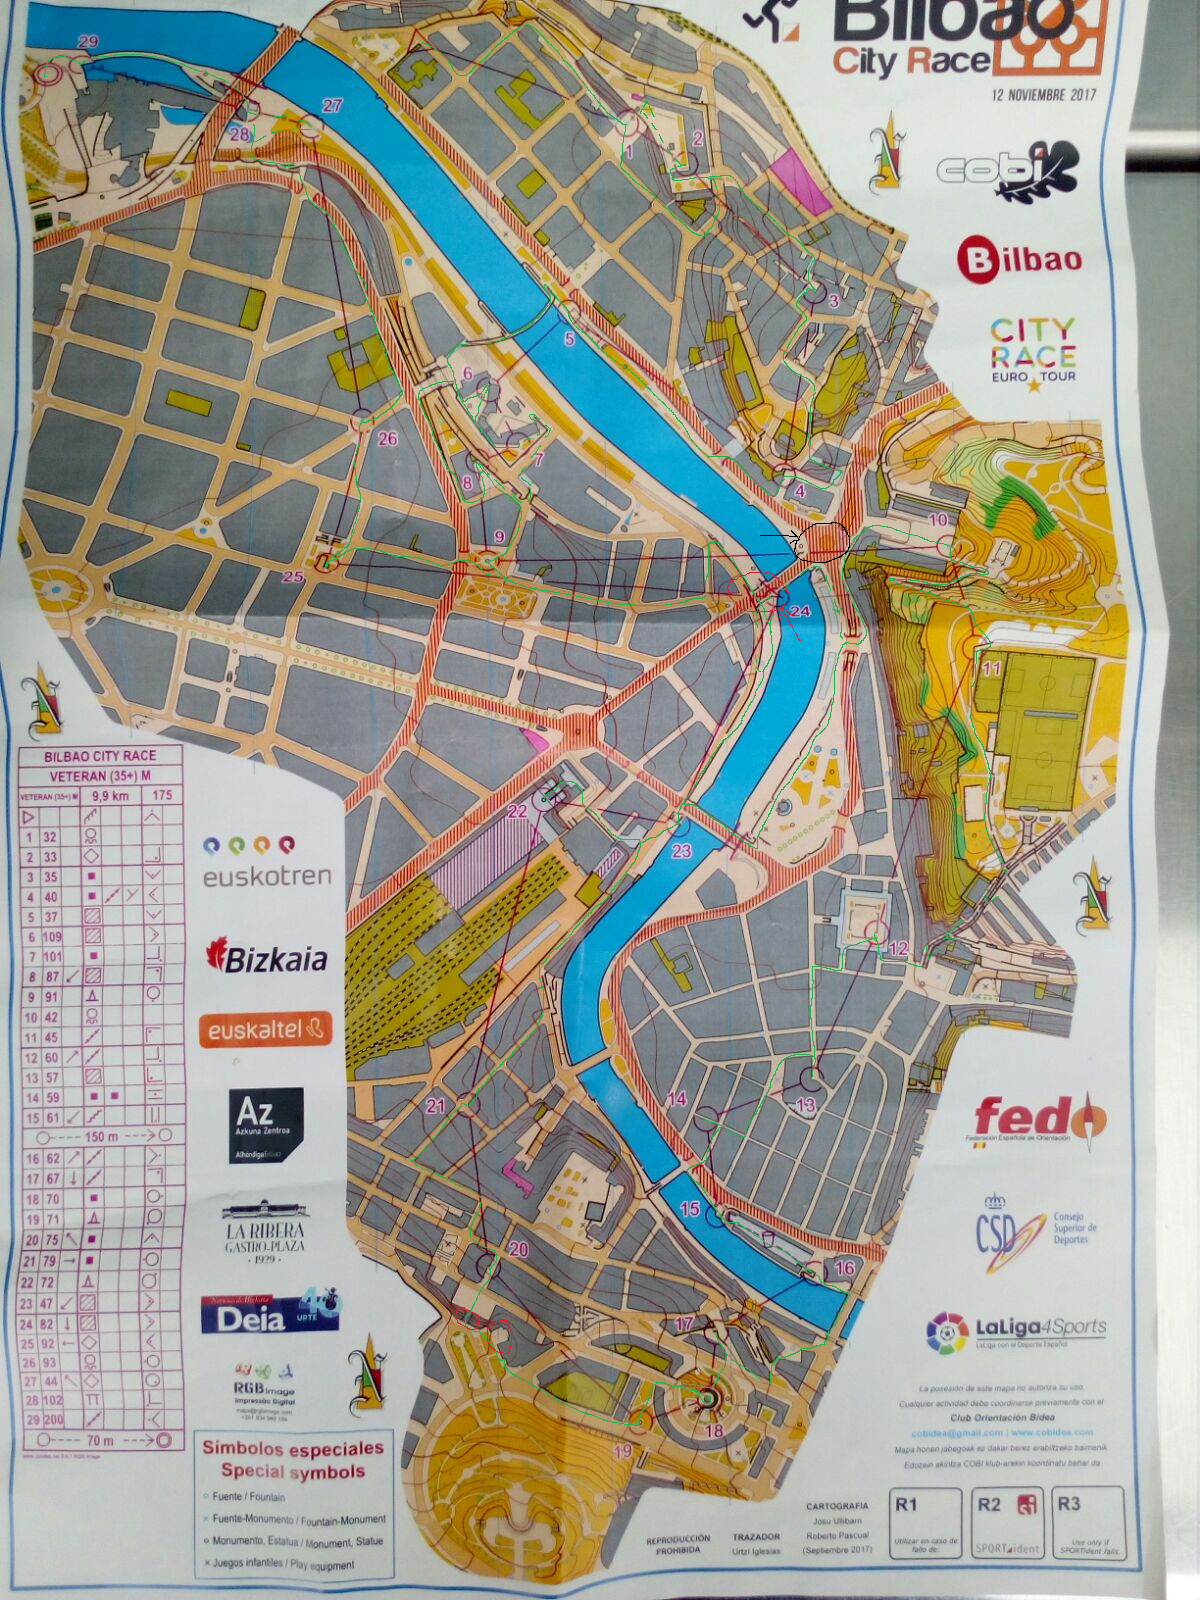 Bilbao City Race (16.11.2017)